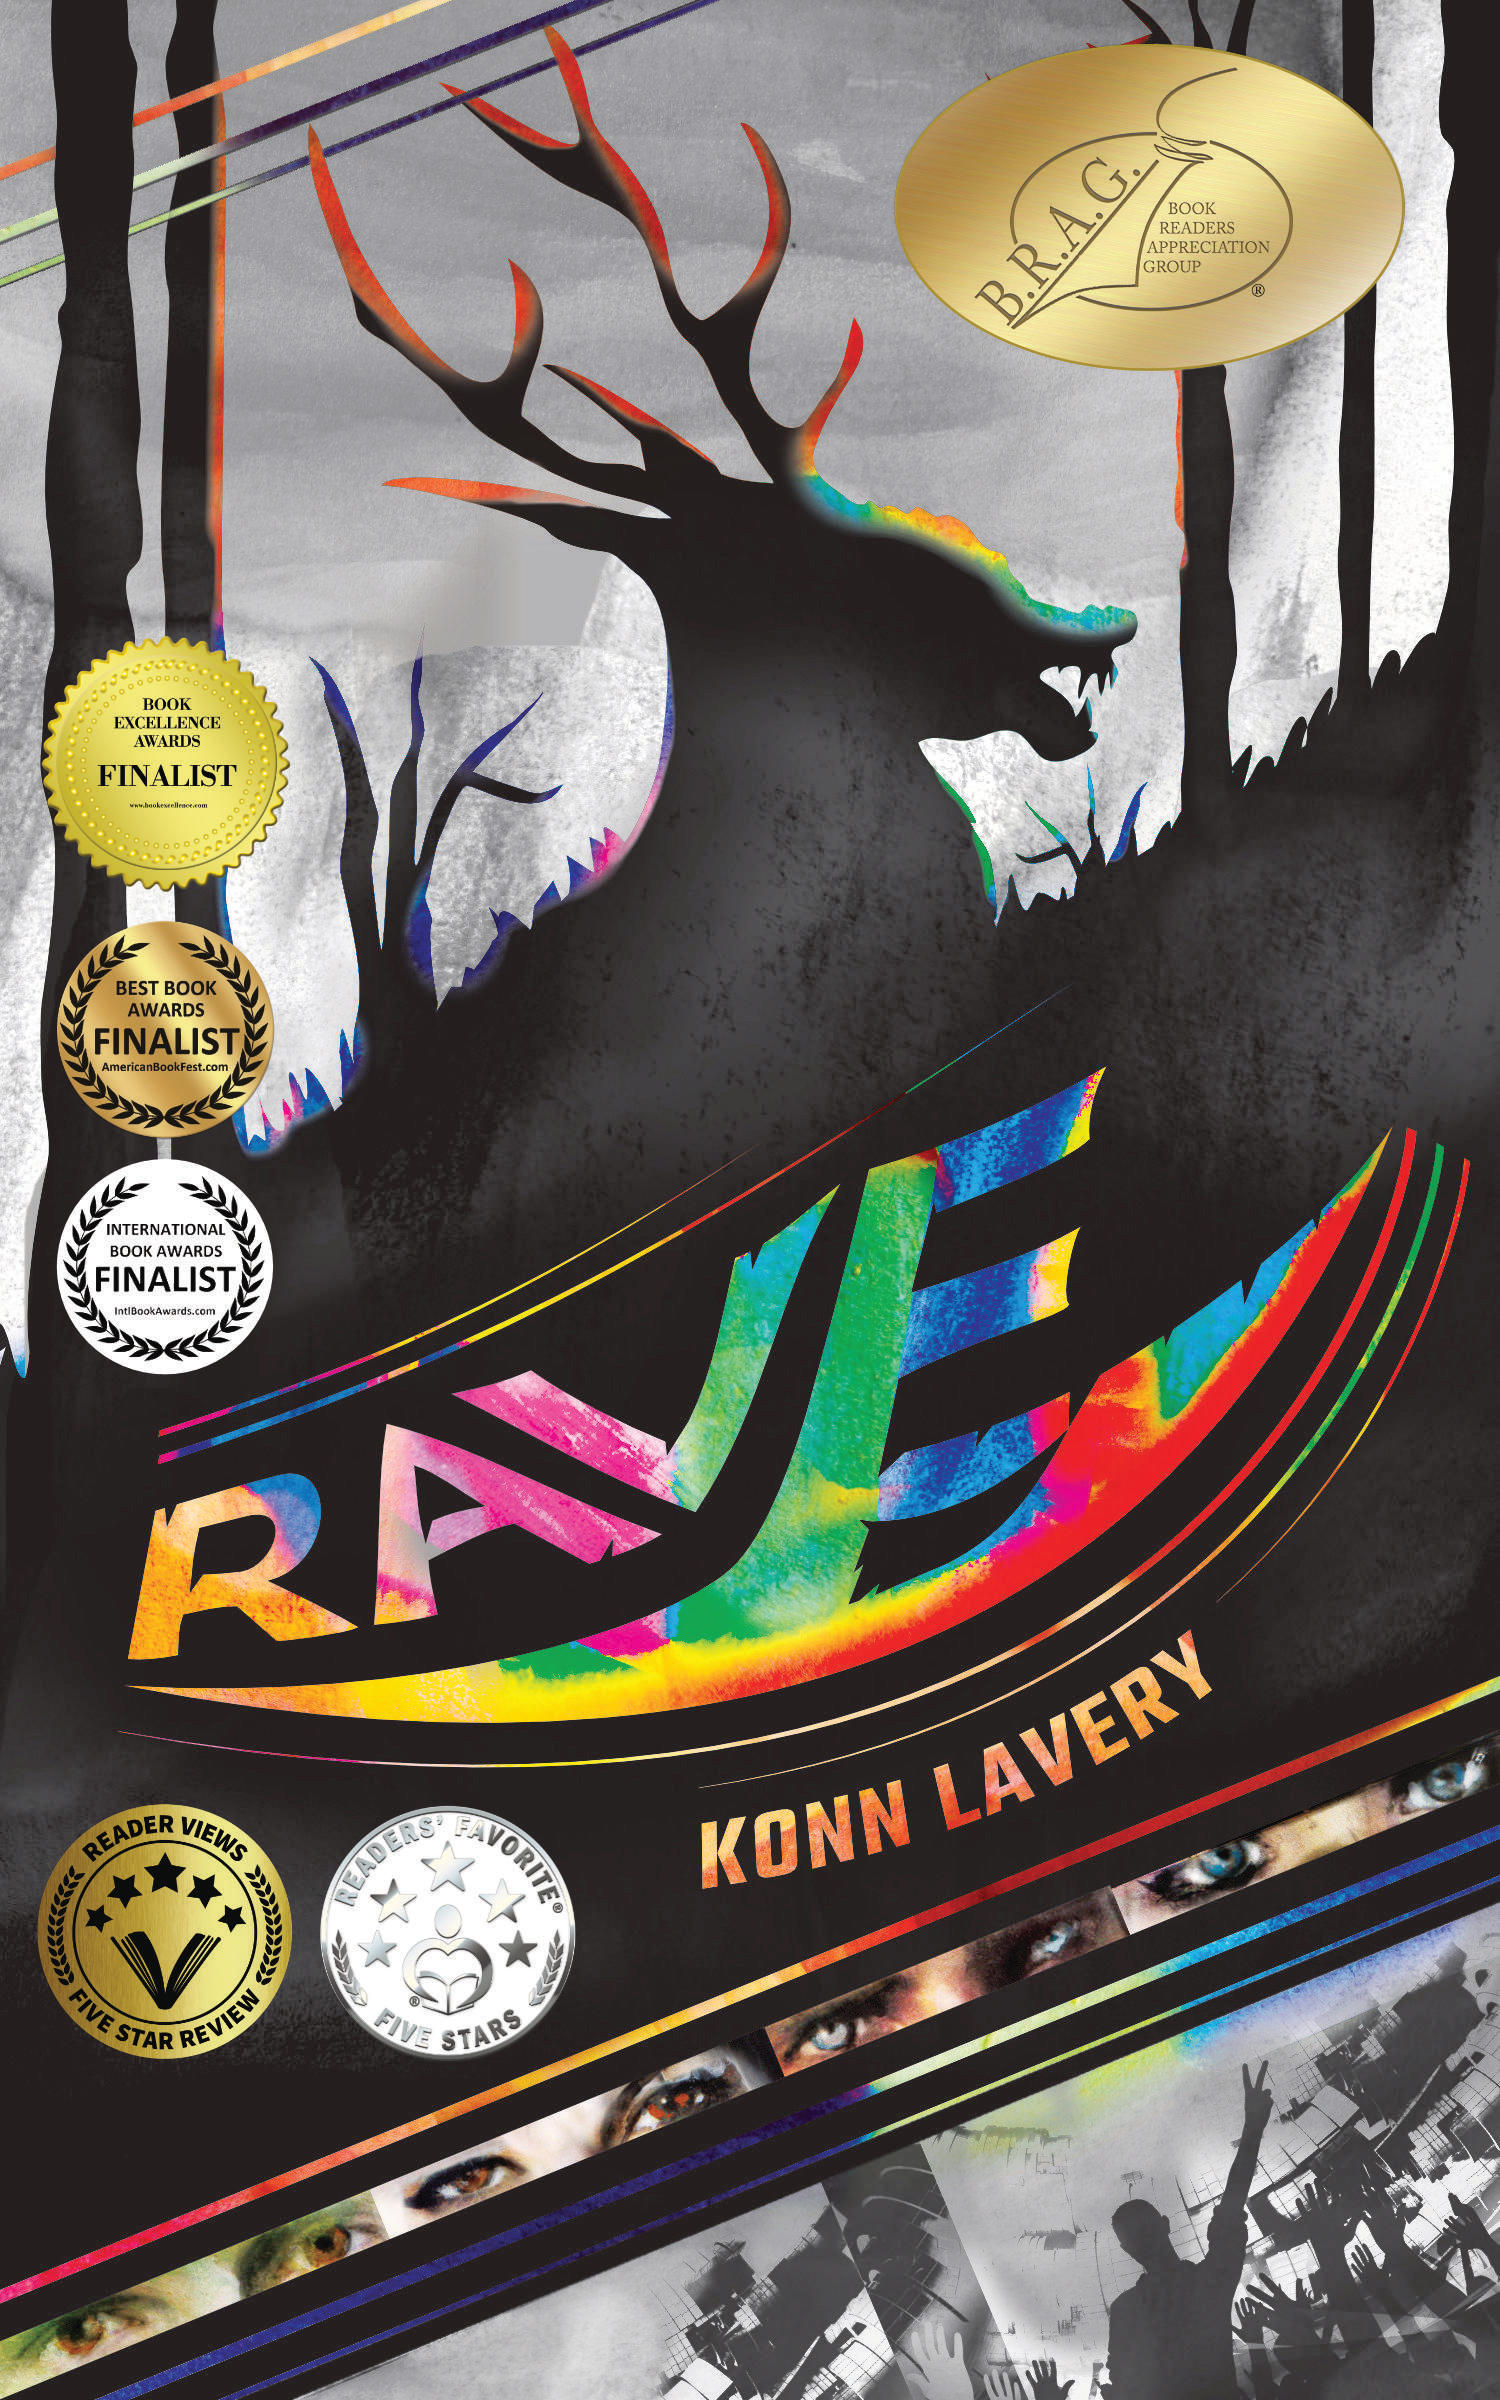 Rave by Konn Lavery. Canadian Slasher Horror Novel